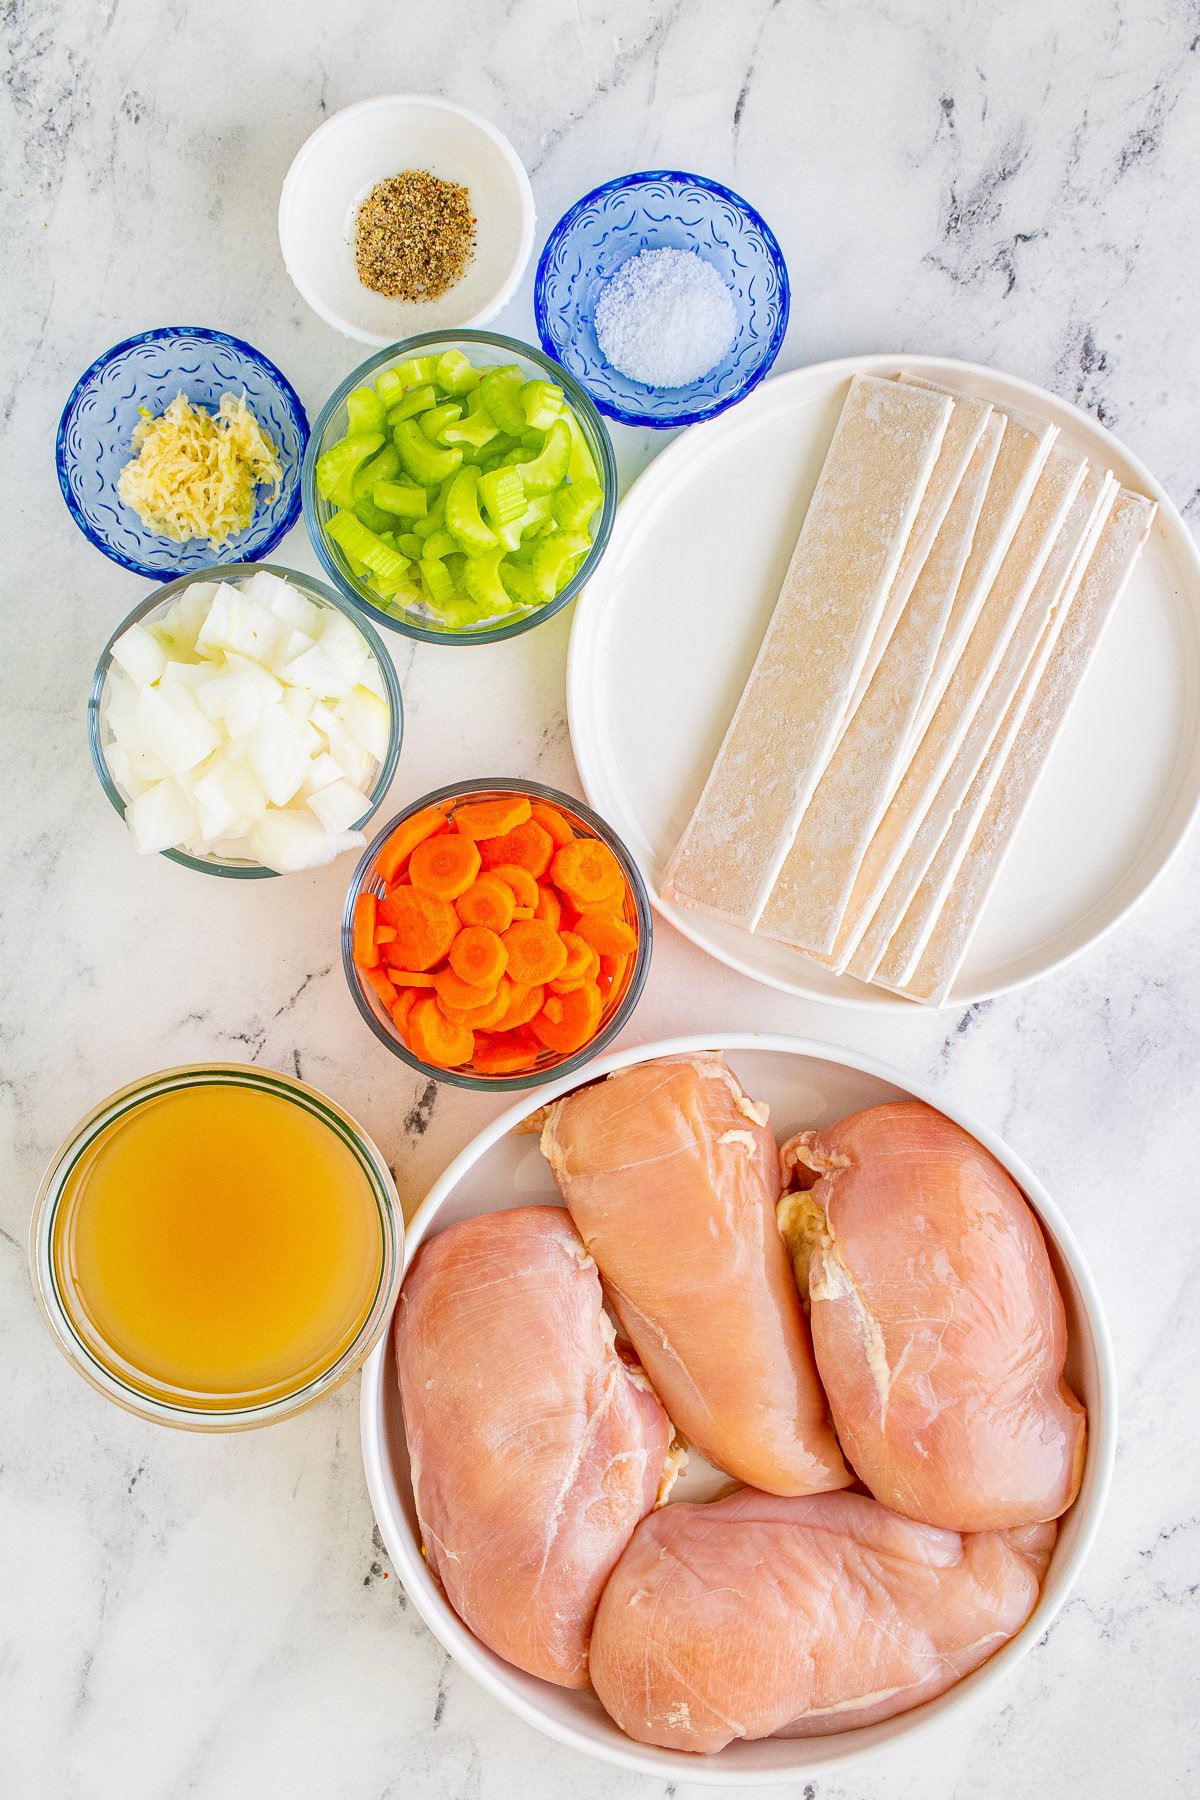 Ingredients needed to make Slow Cooker Chicken and Dumplings